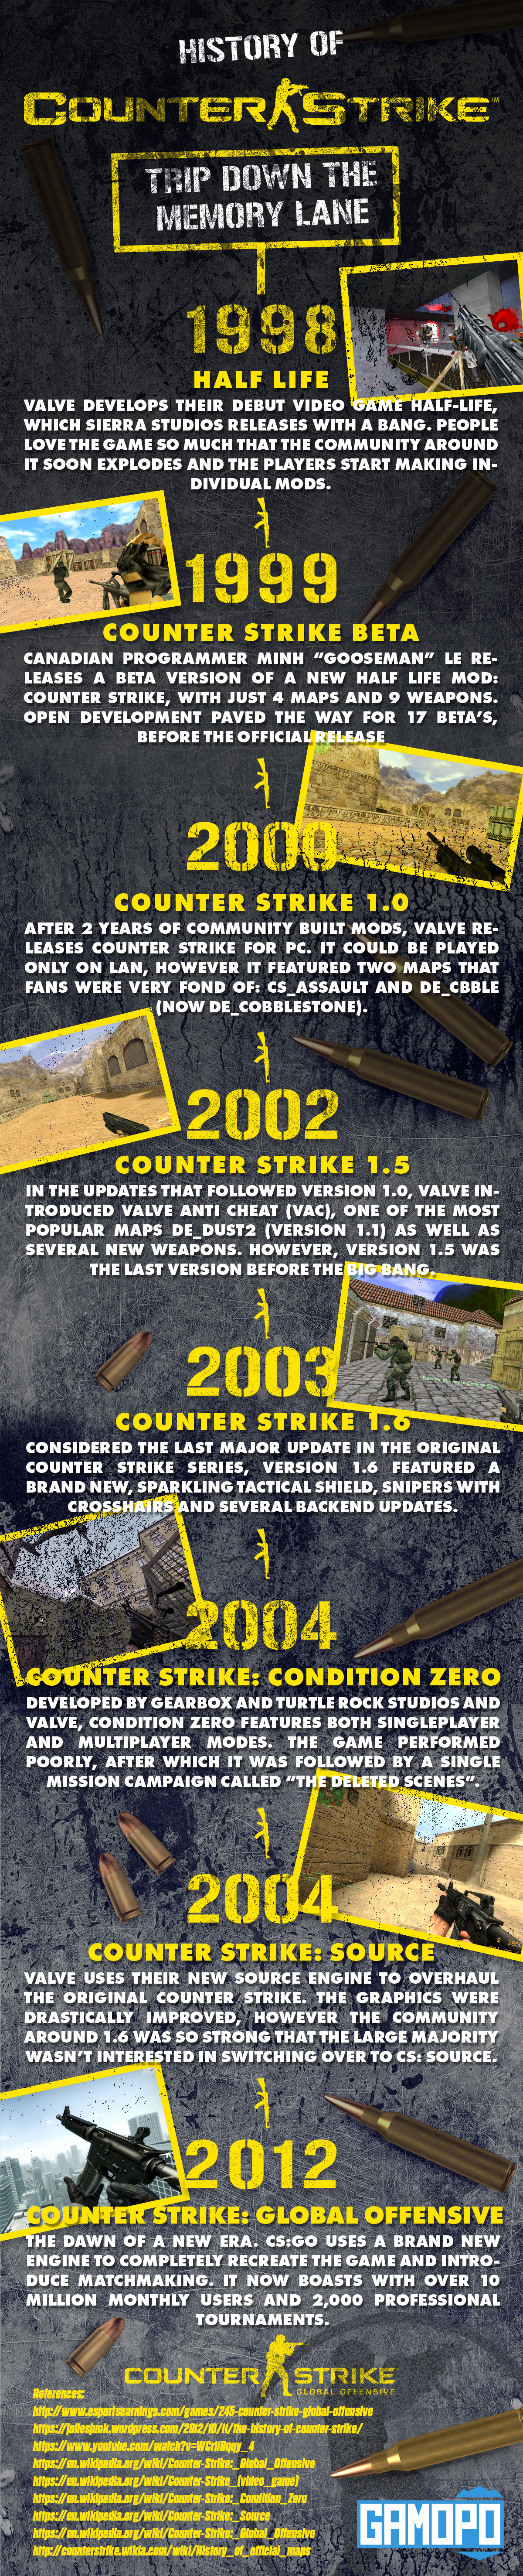 Histoire de Counter Strike - Infographie